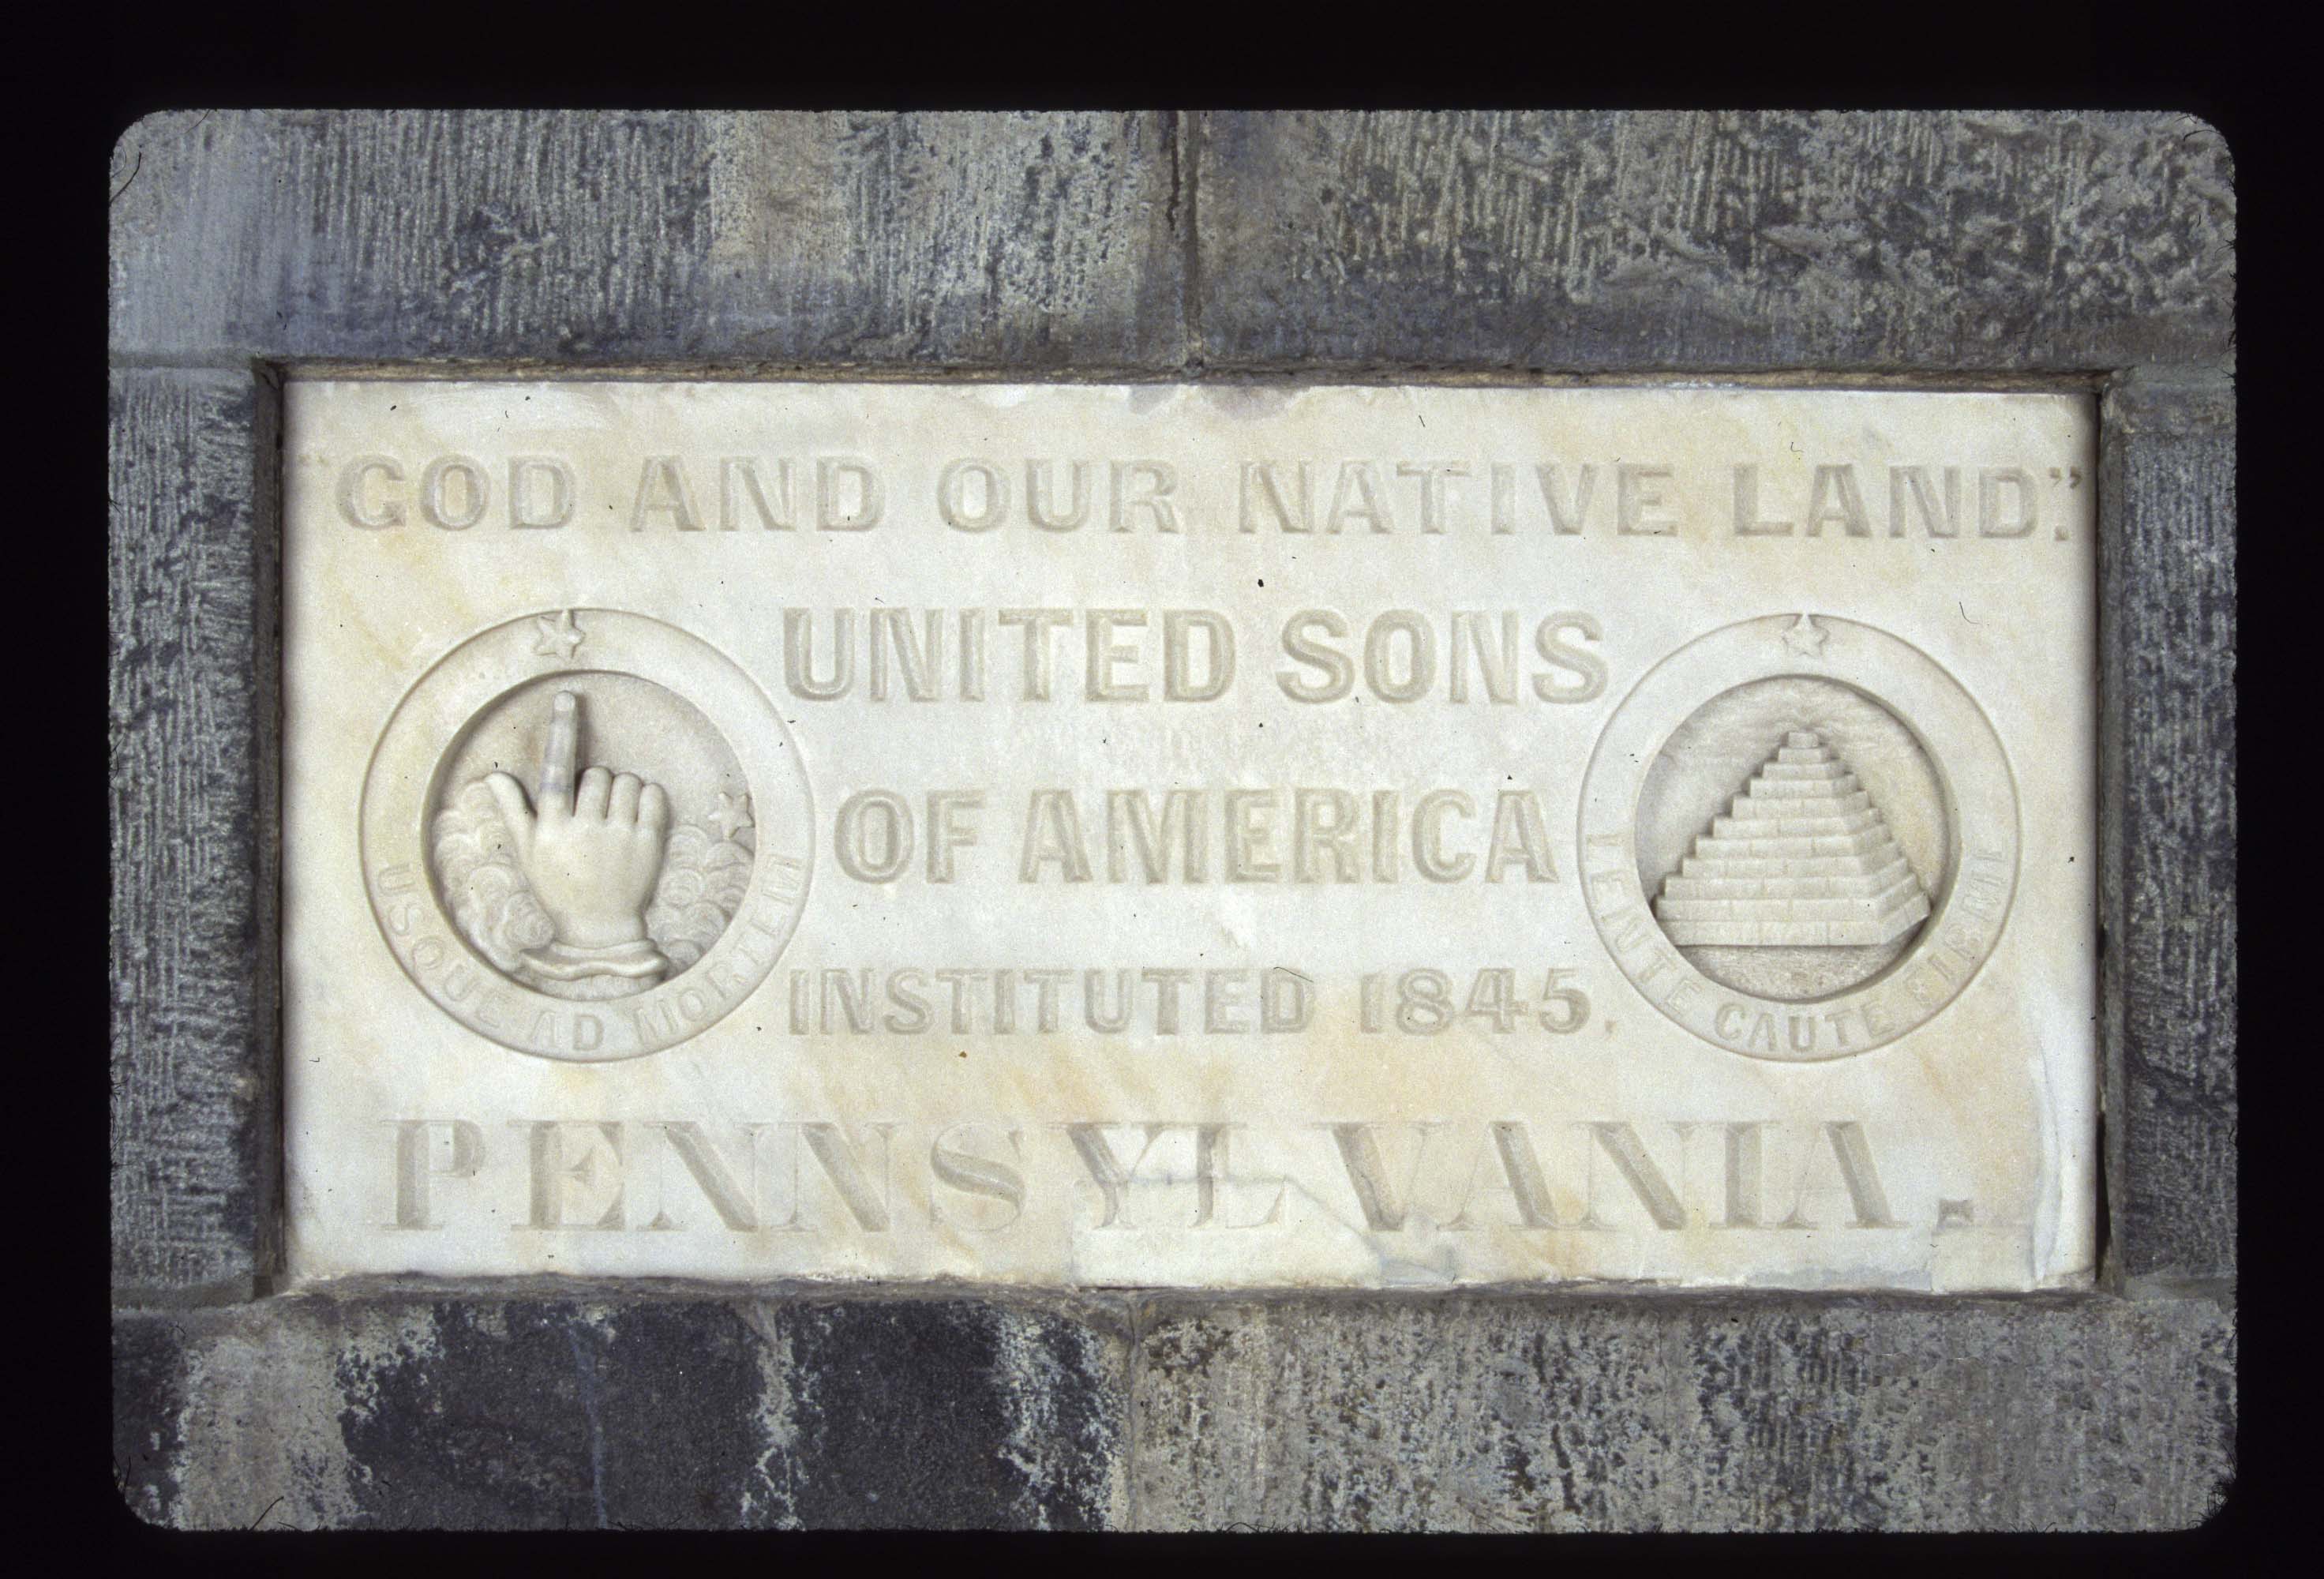 United Sons of America, Pennsylvania